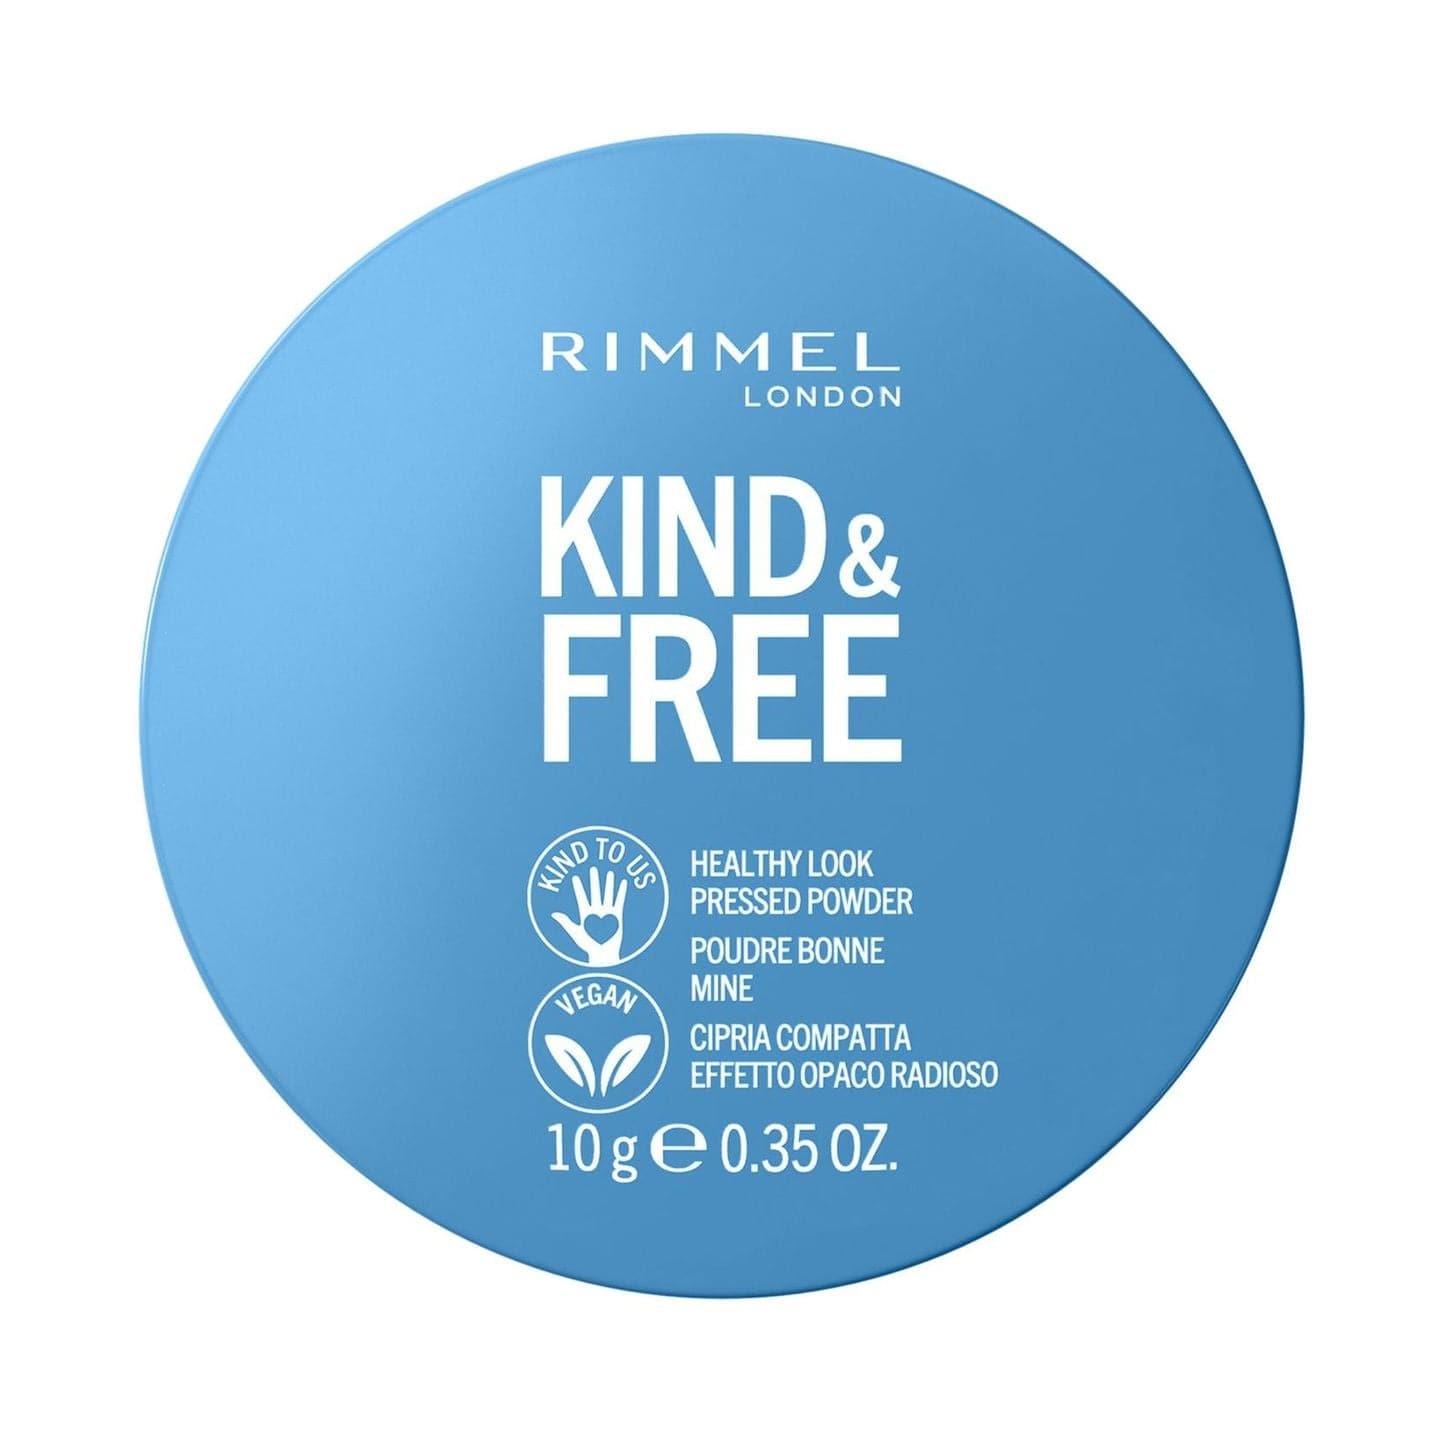 Rimmel London Kind & Free Powder - 020 Light - Premium Health & Beauty from Rimmel London - Just Rs 2140! Shop now at Cozmetica